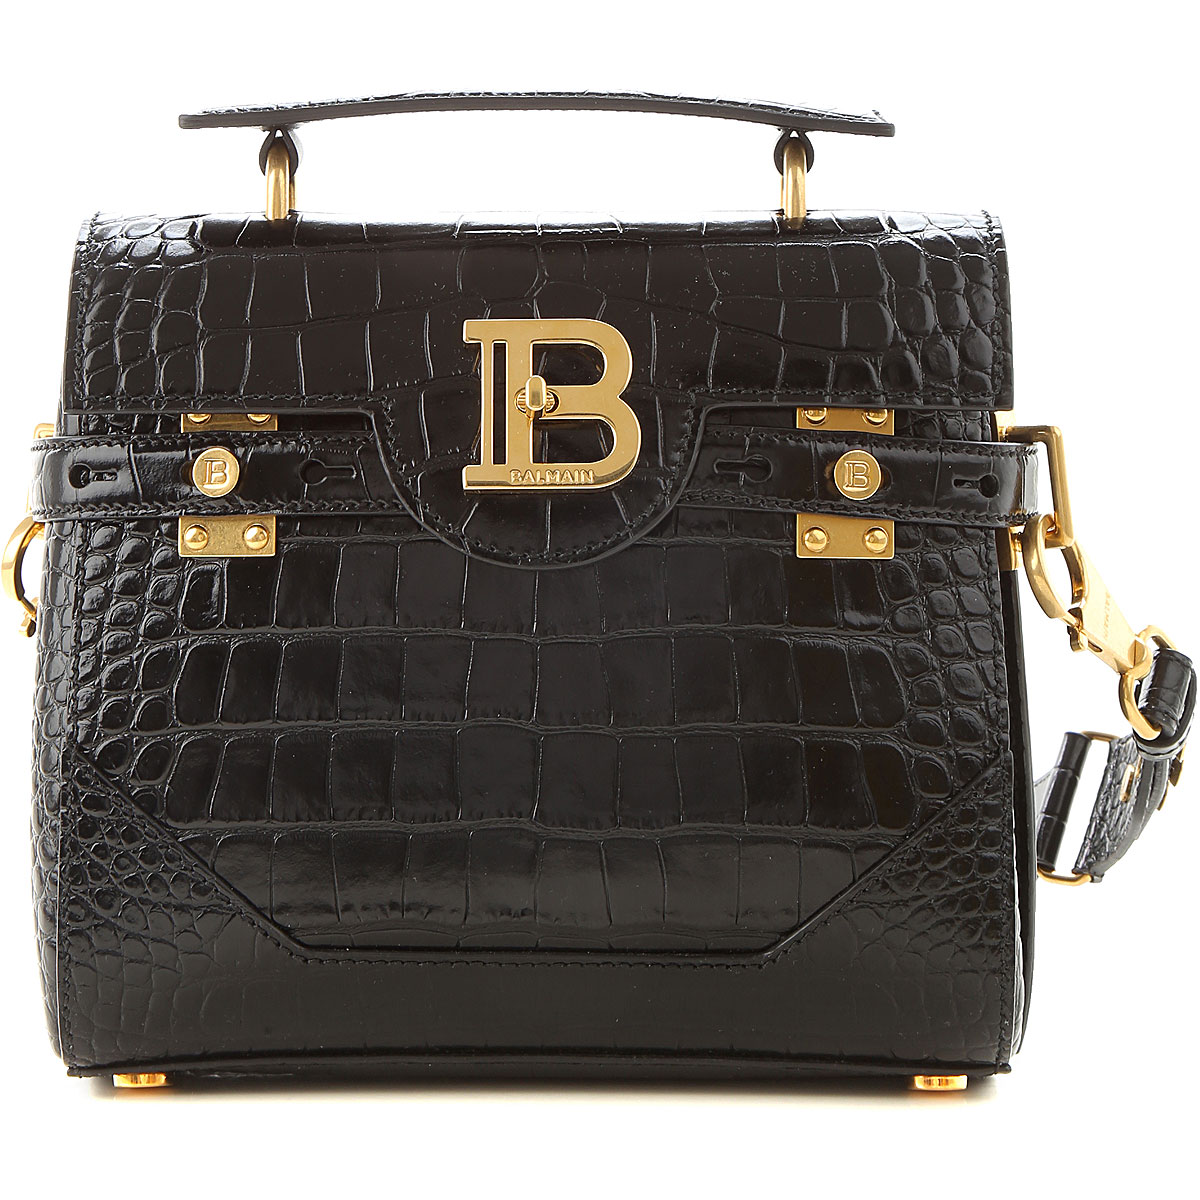 Handbags Balmain, Style code: un0s526lvcw-0pa-